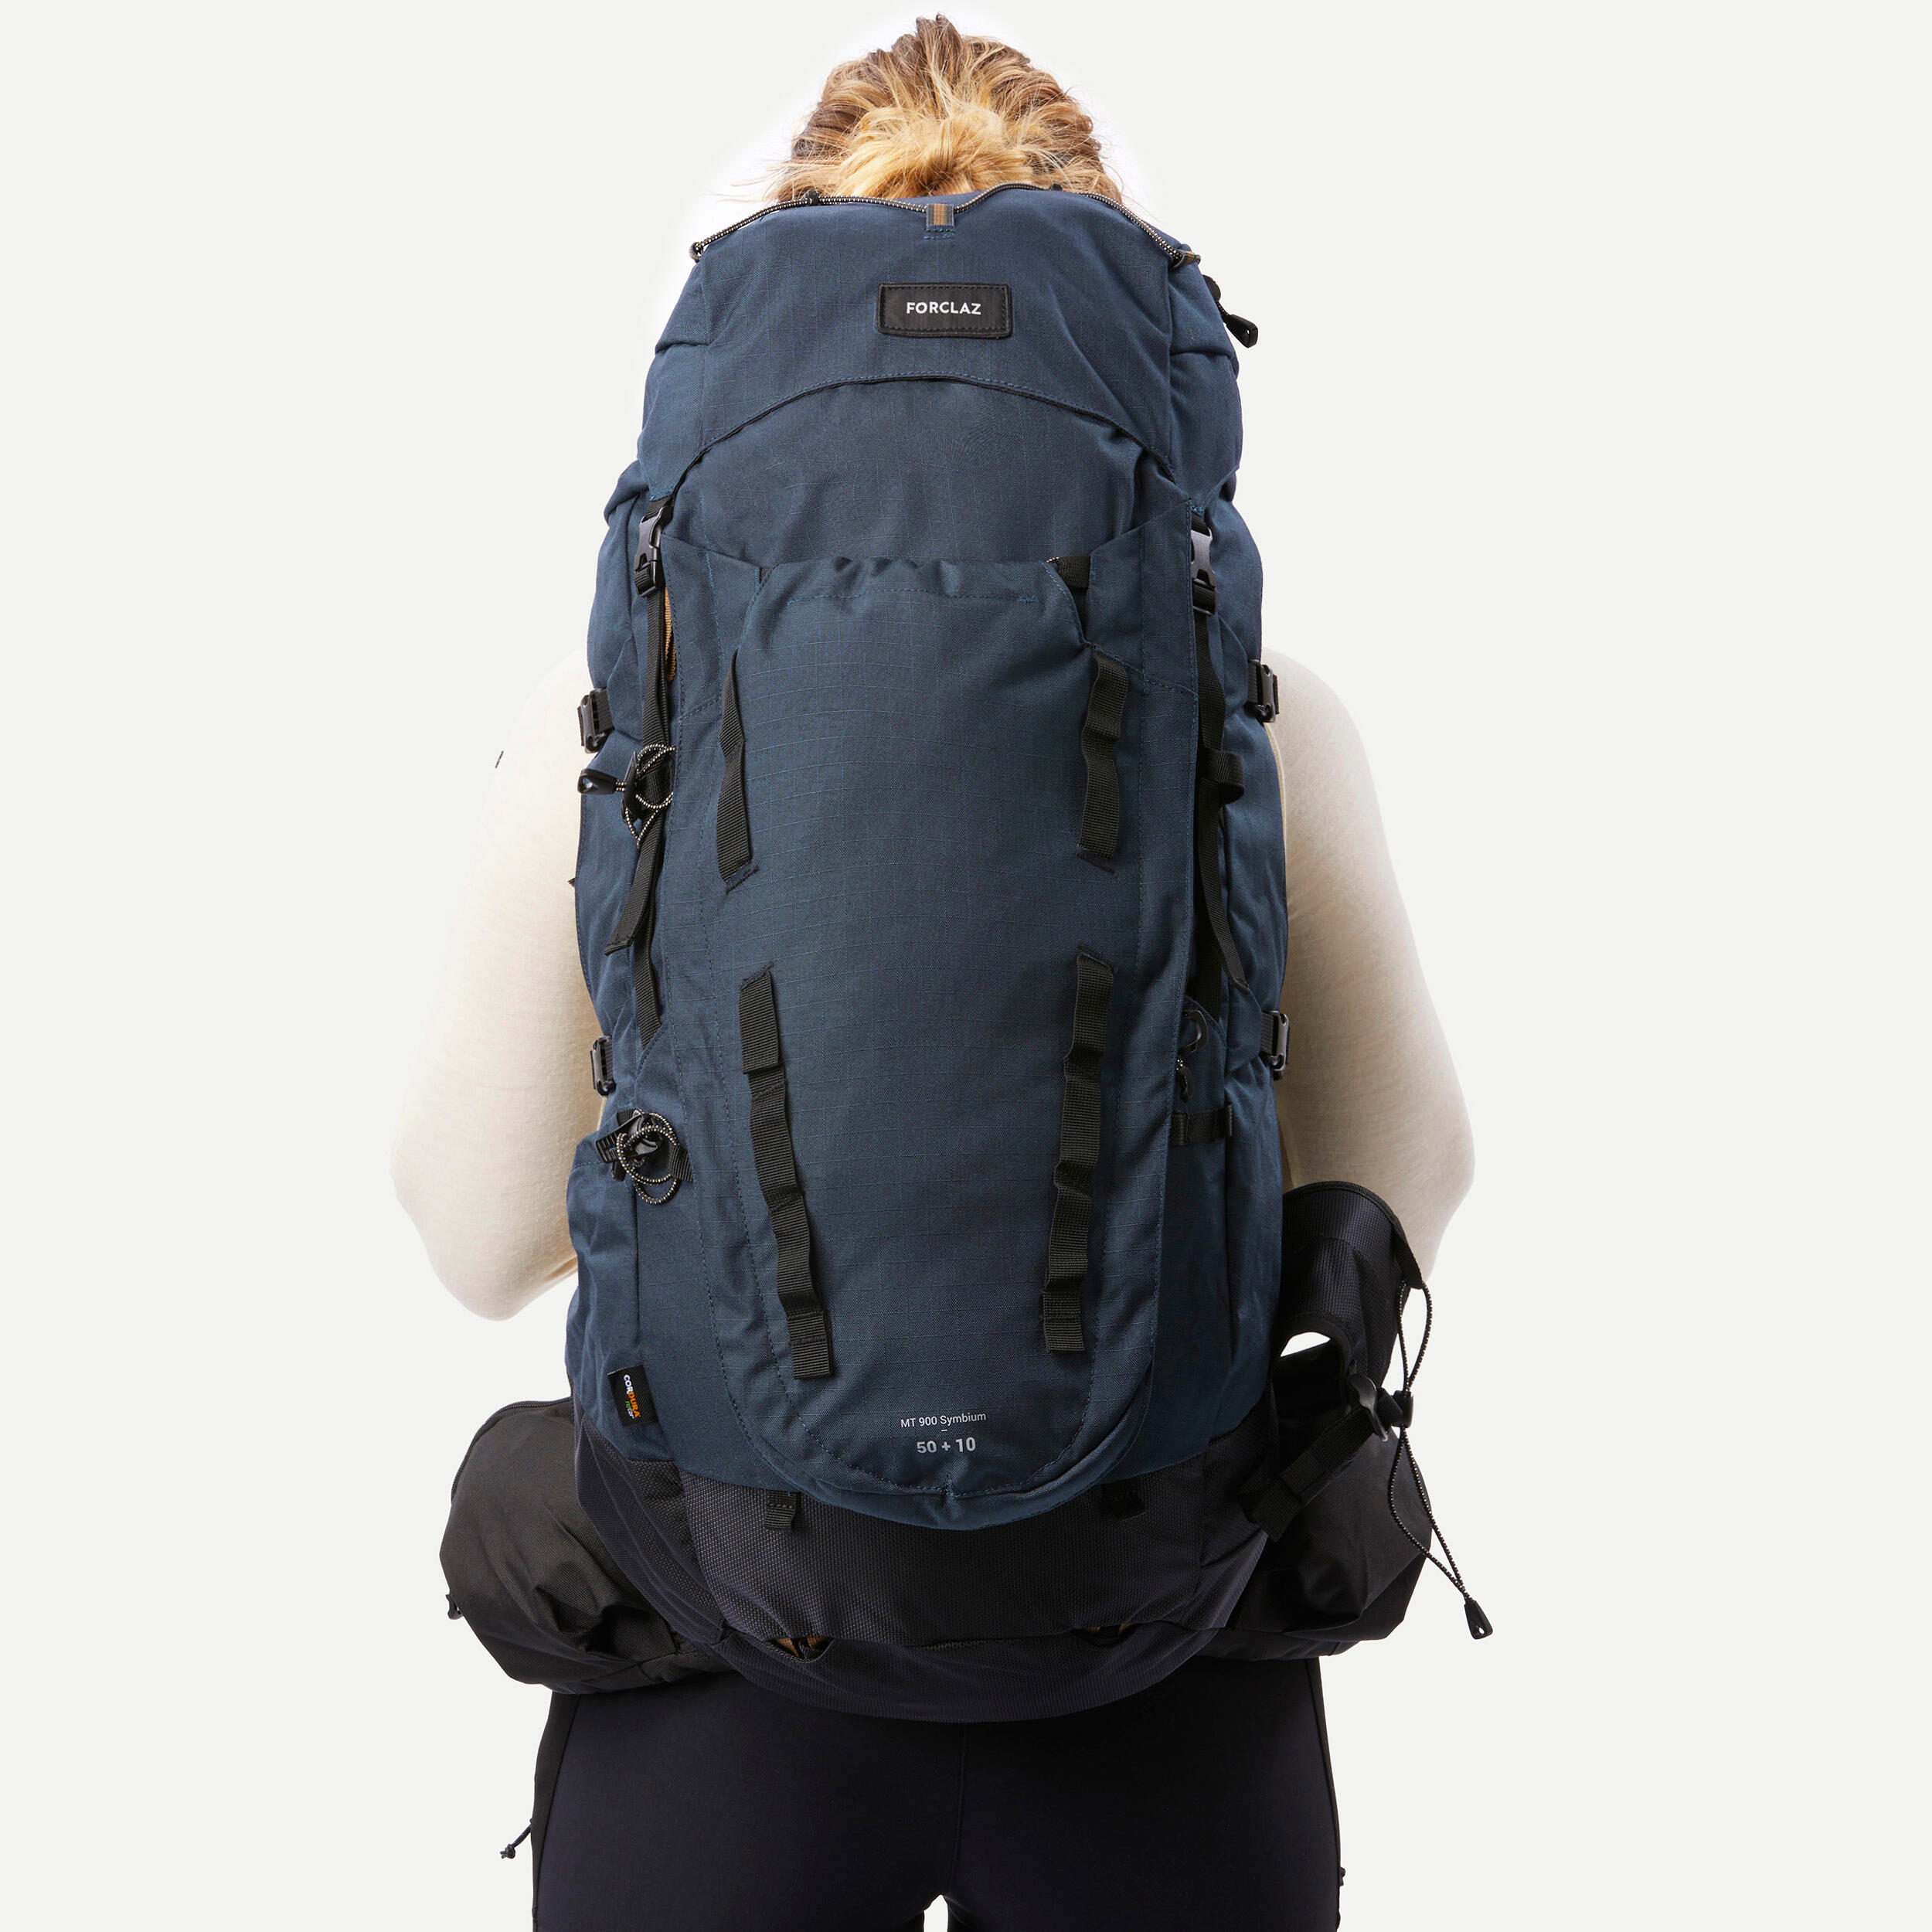 Women’s 50 + 10 L Hiking Backpack - MT 900